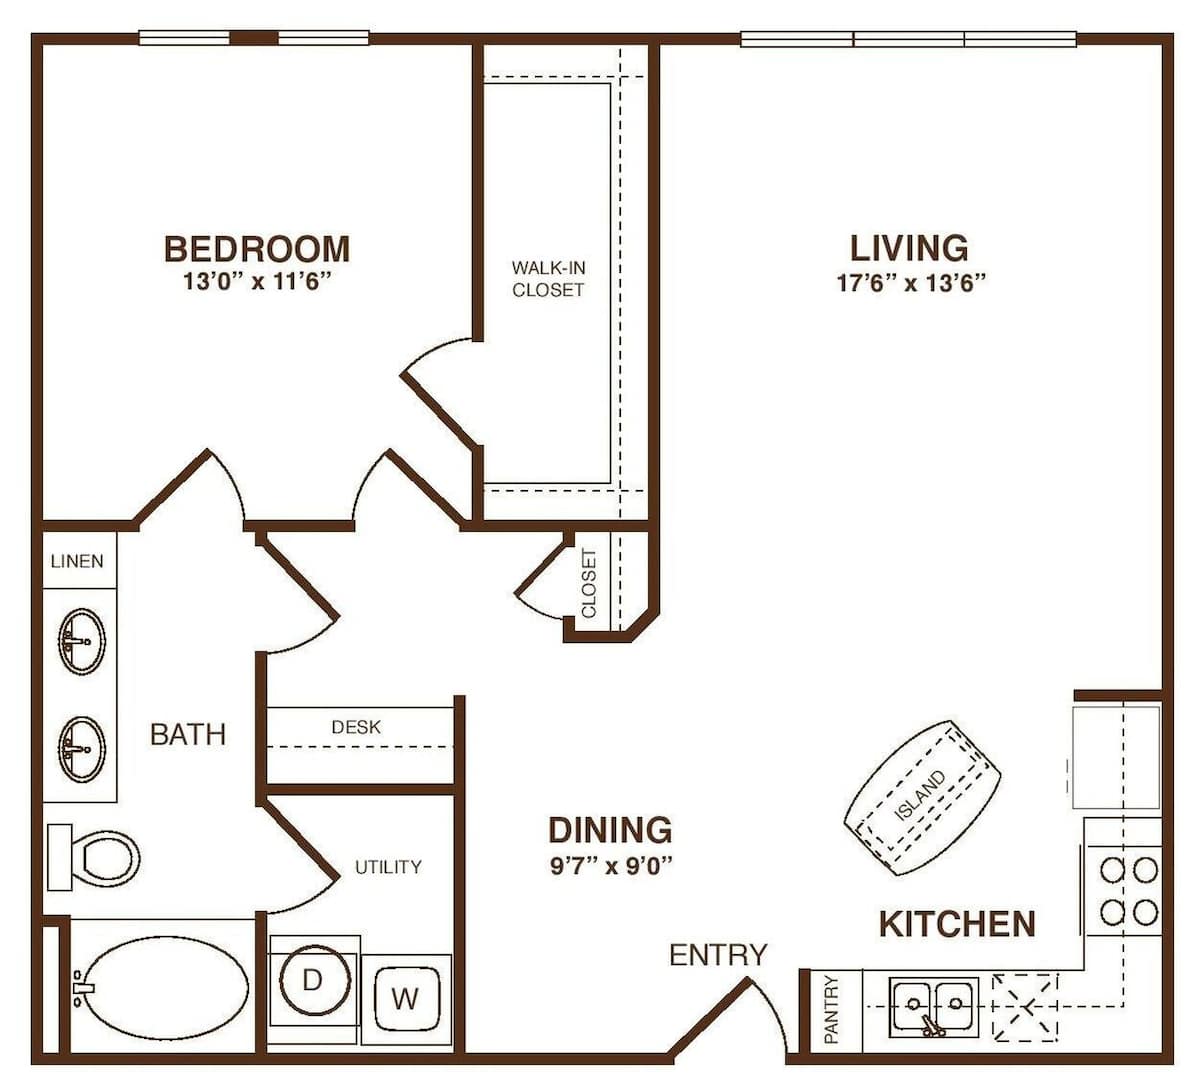 Floorplan diagram for The Carlisle, showing 1 bedroom